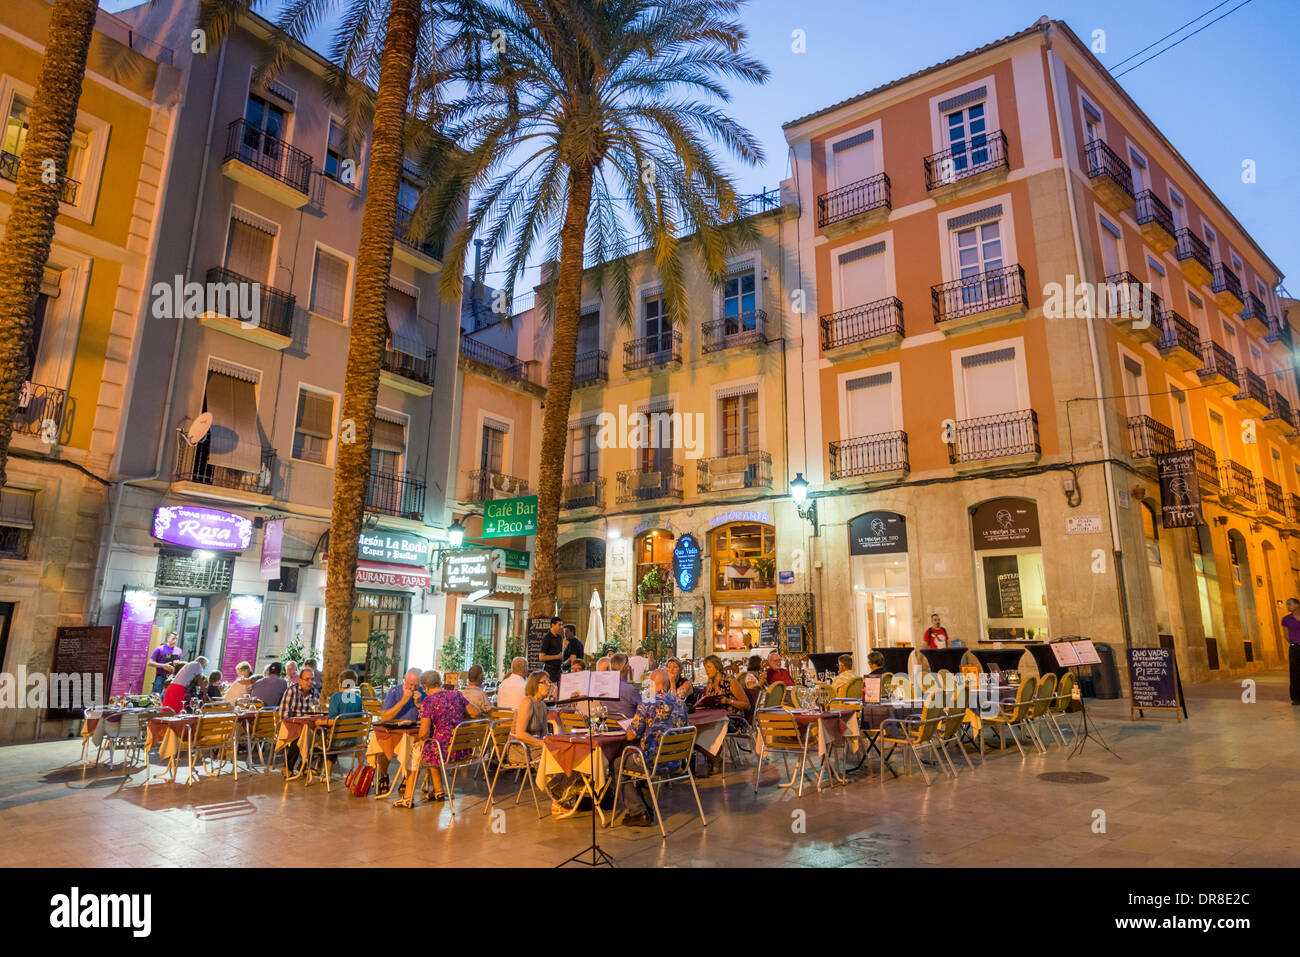 People dining at the pavement restaurants on Plaza Santisima Faz, Alicante, Costa Blanca, Spain Stock Photo